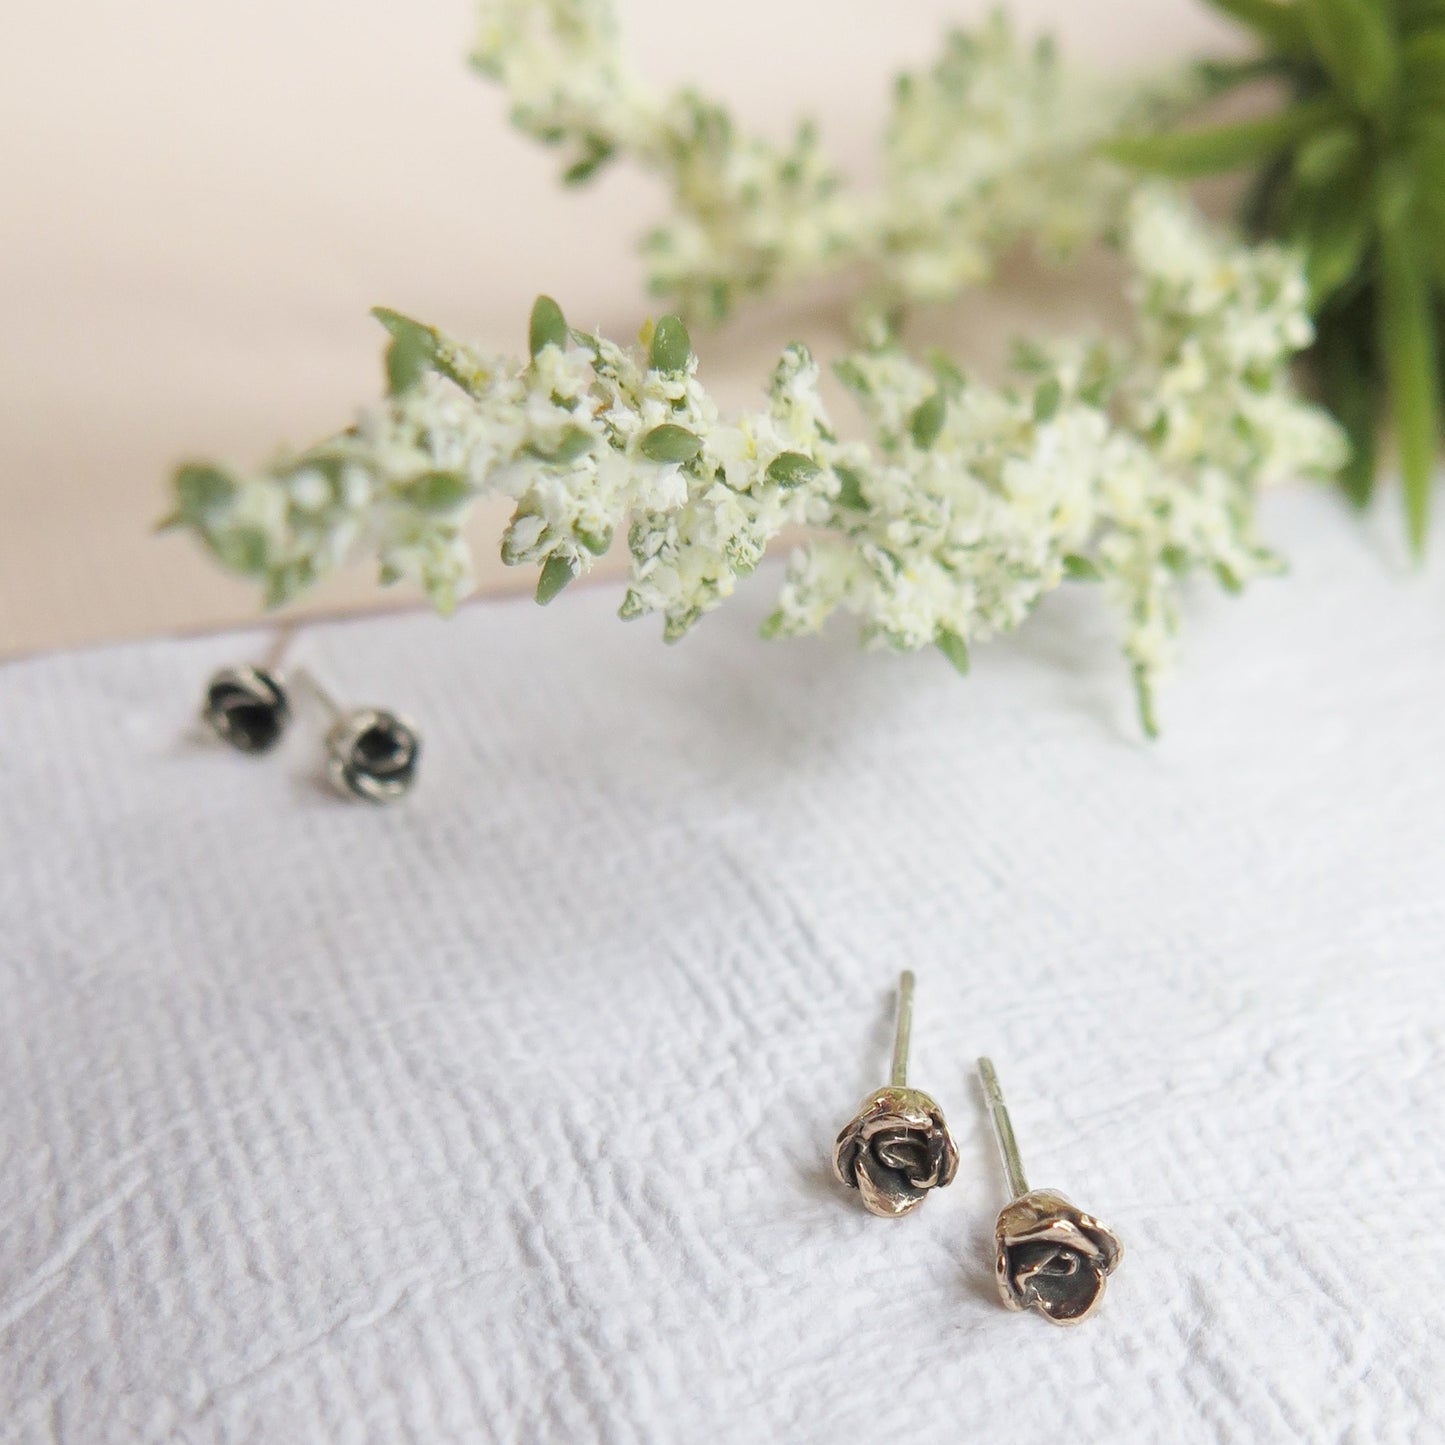 mini rose stud earrings, tiny rosebud studs, delicate earrings, dainty studs, everyday earrings